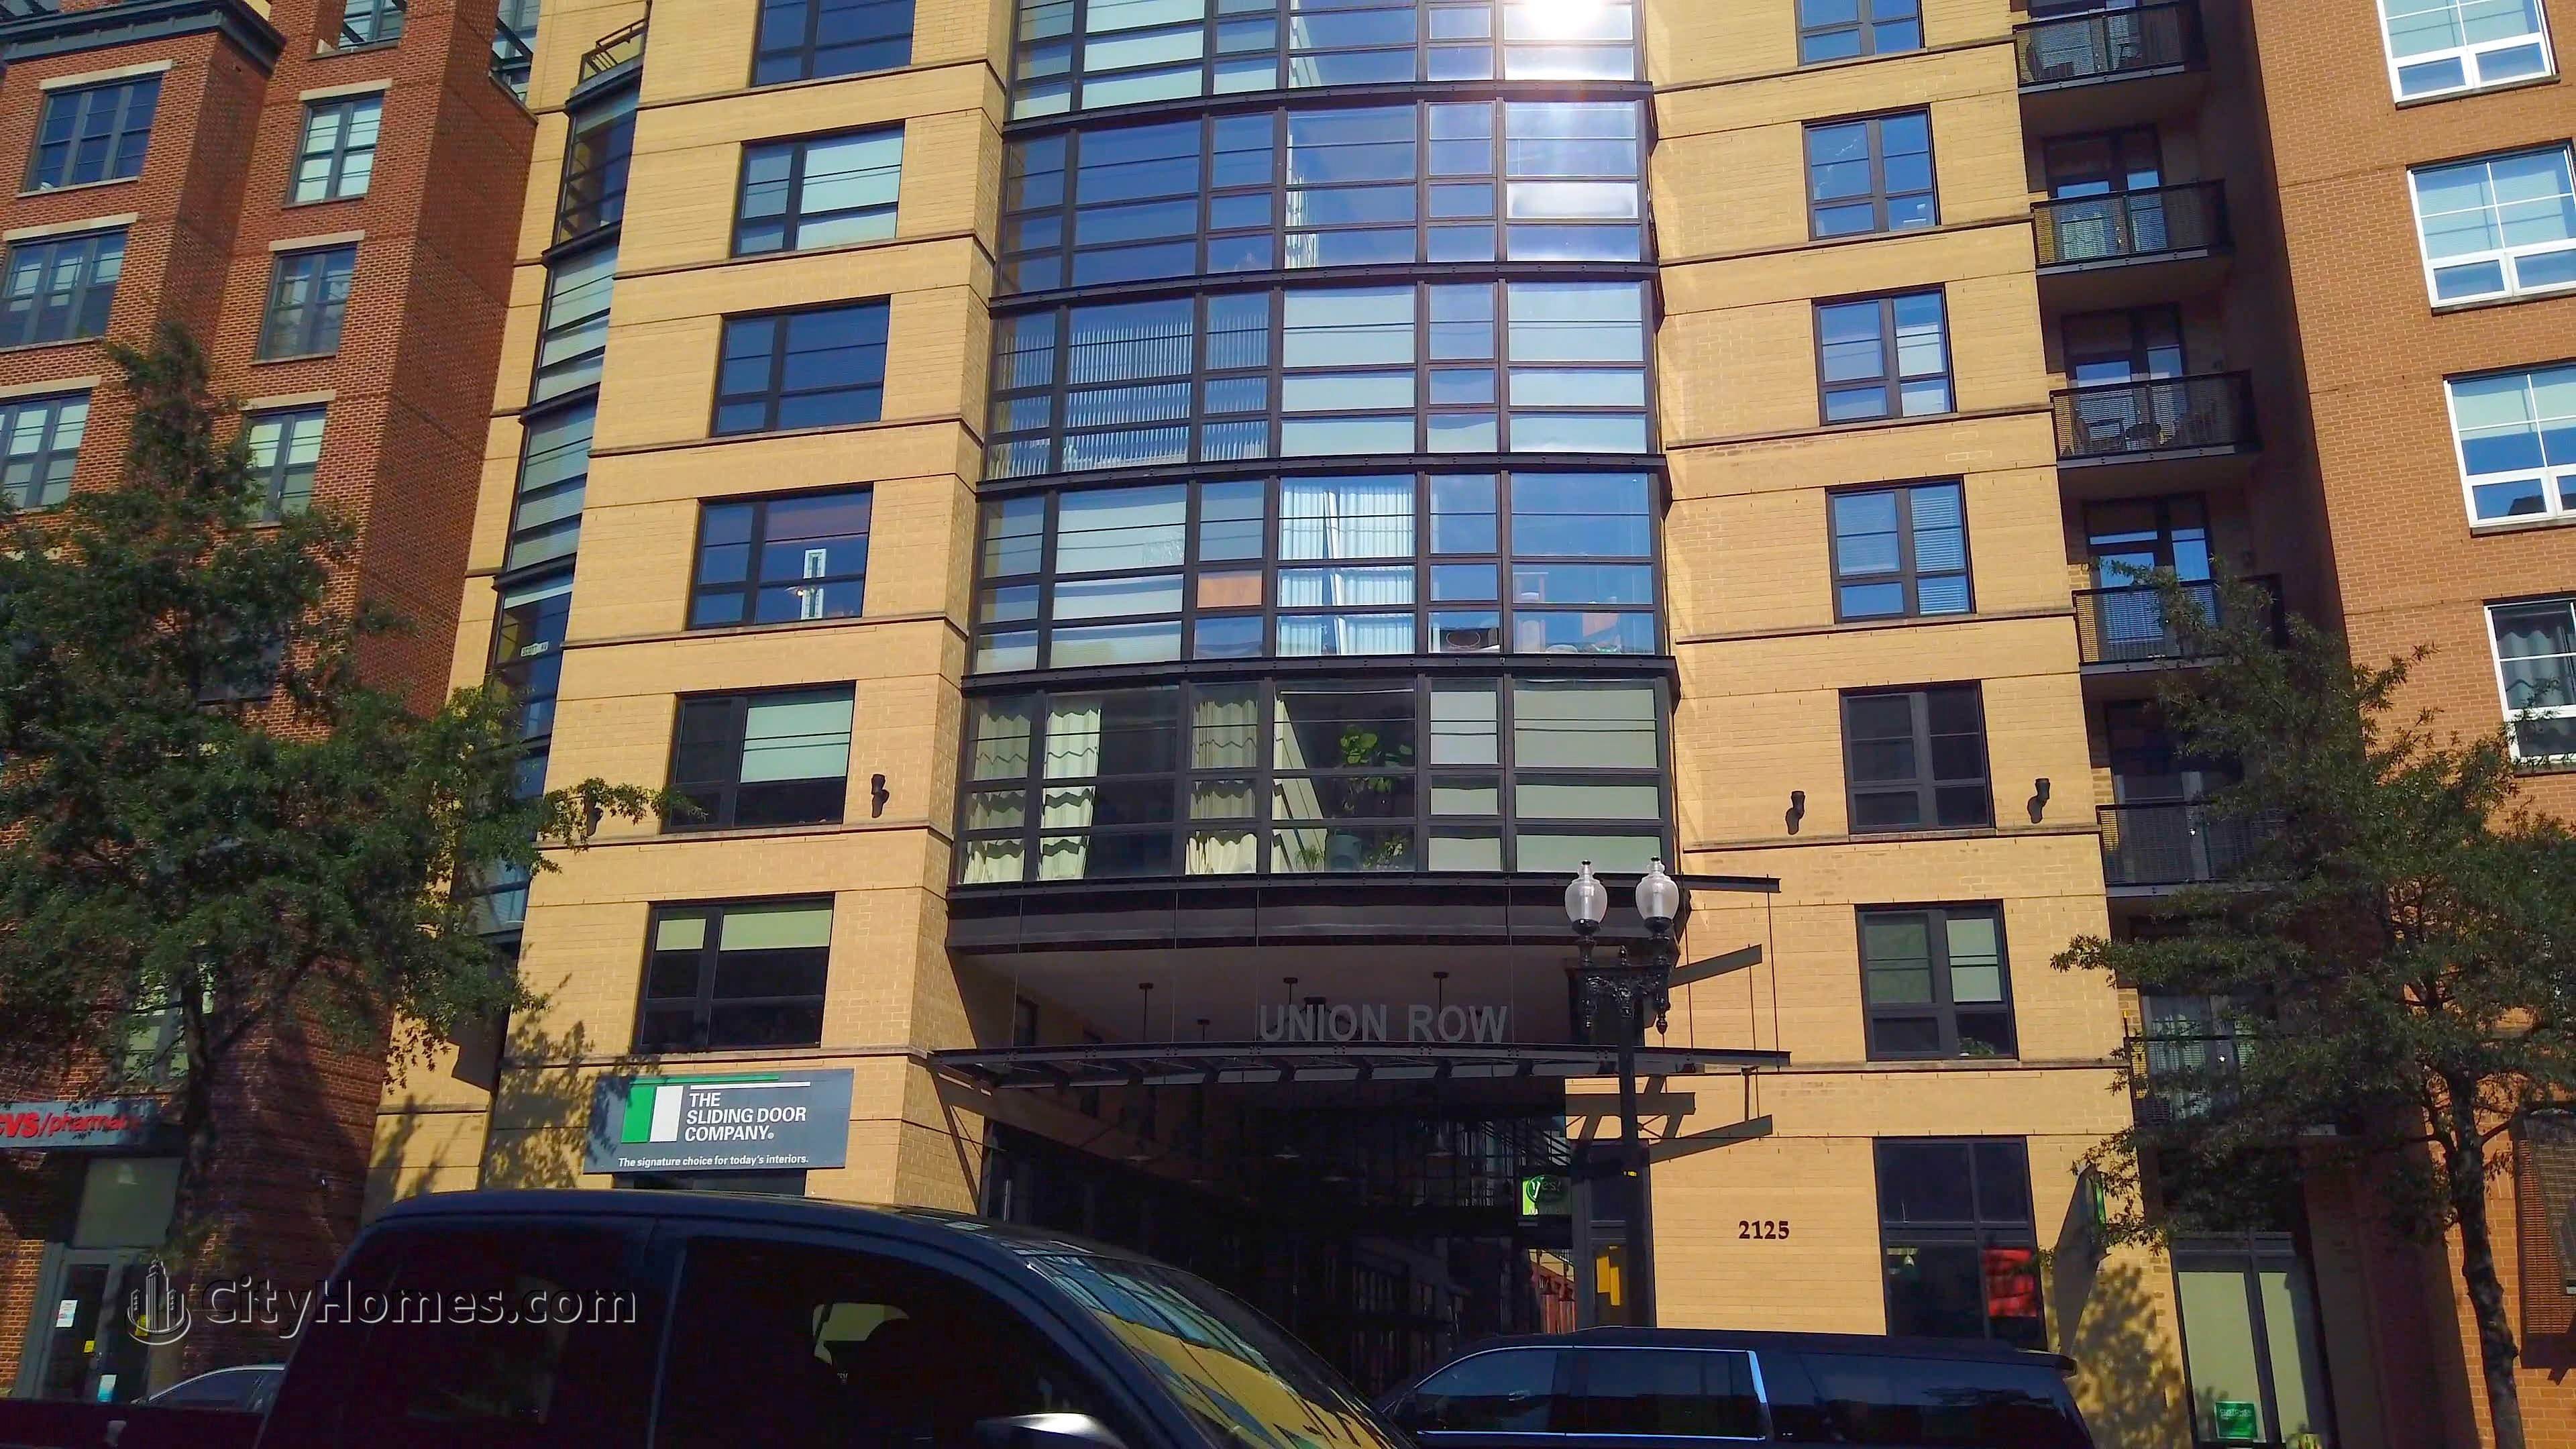 3. Flats at Union Row prédio em 2125 14th St NW, U Street Corridor, Washington, DC 20009